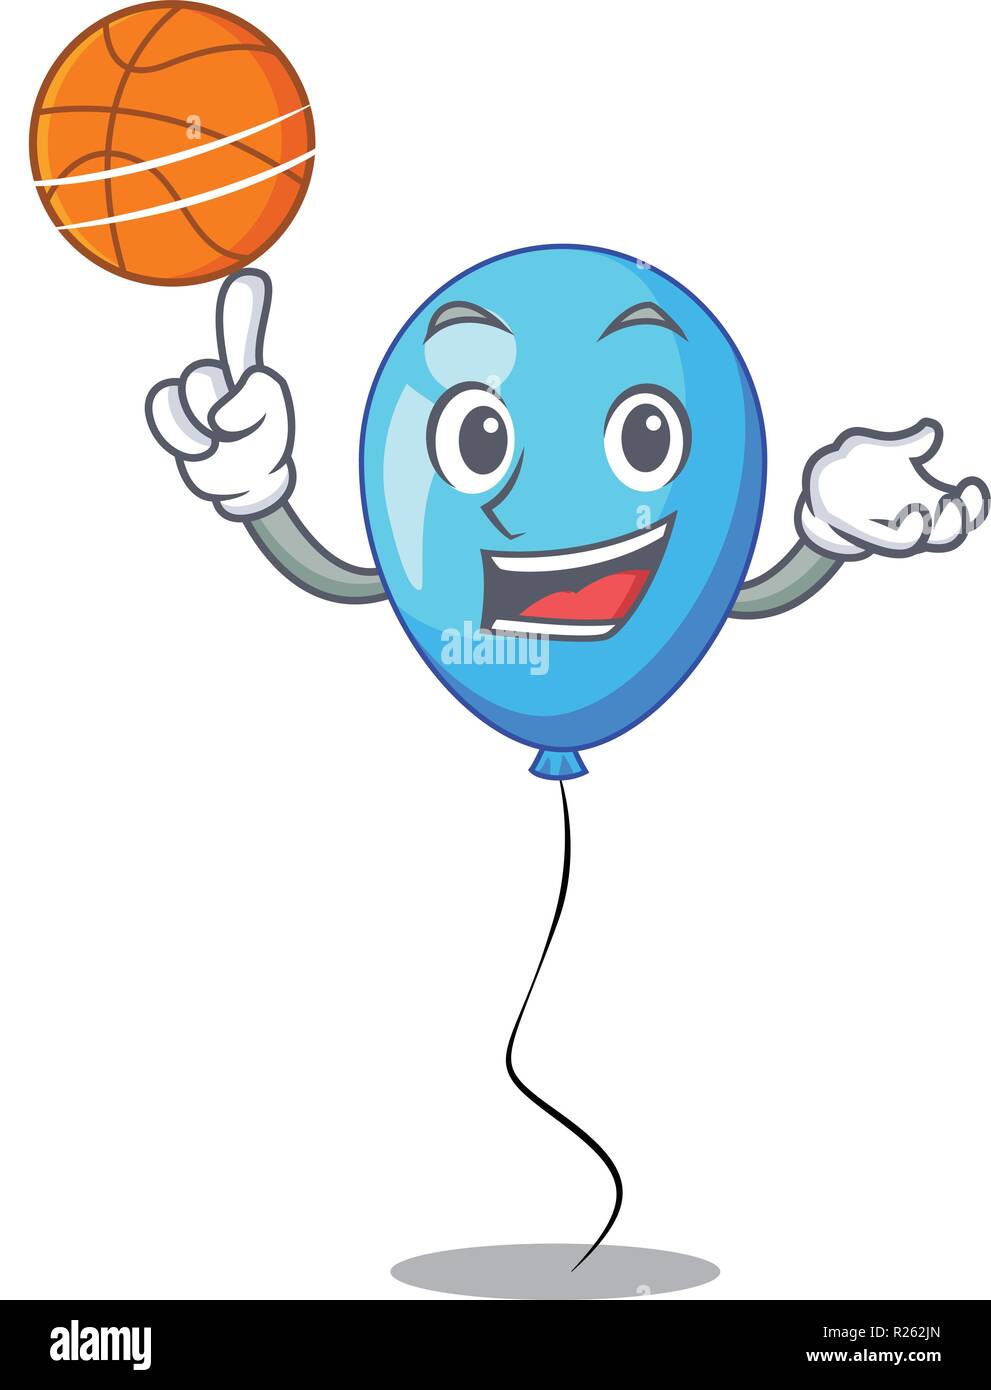 With basketball birthday cartoon on shape balloon blue Stock Vector